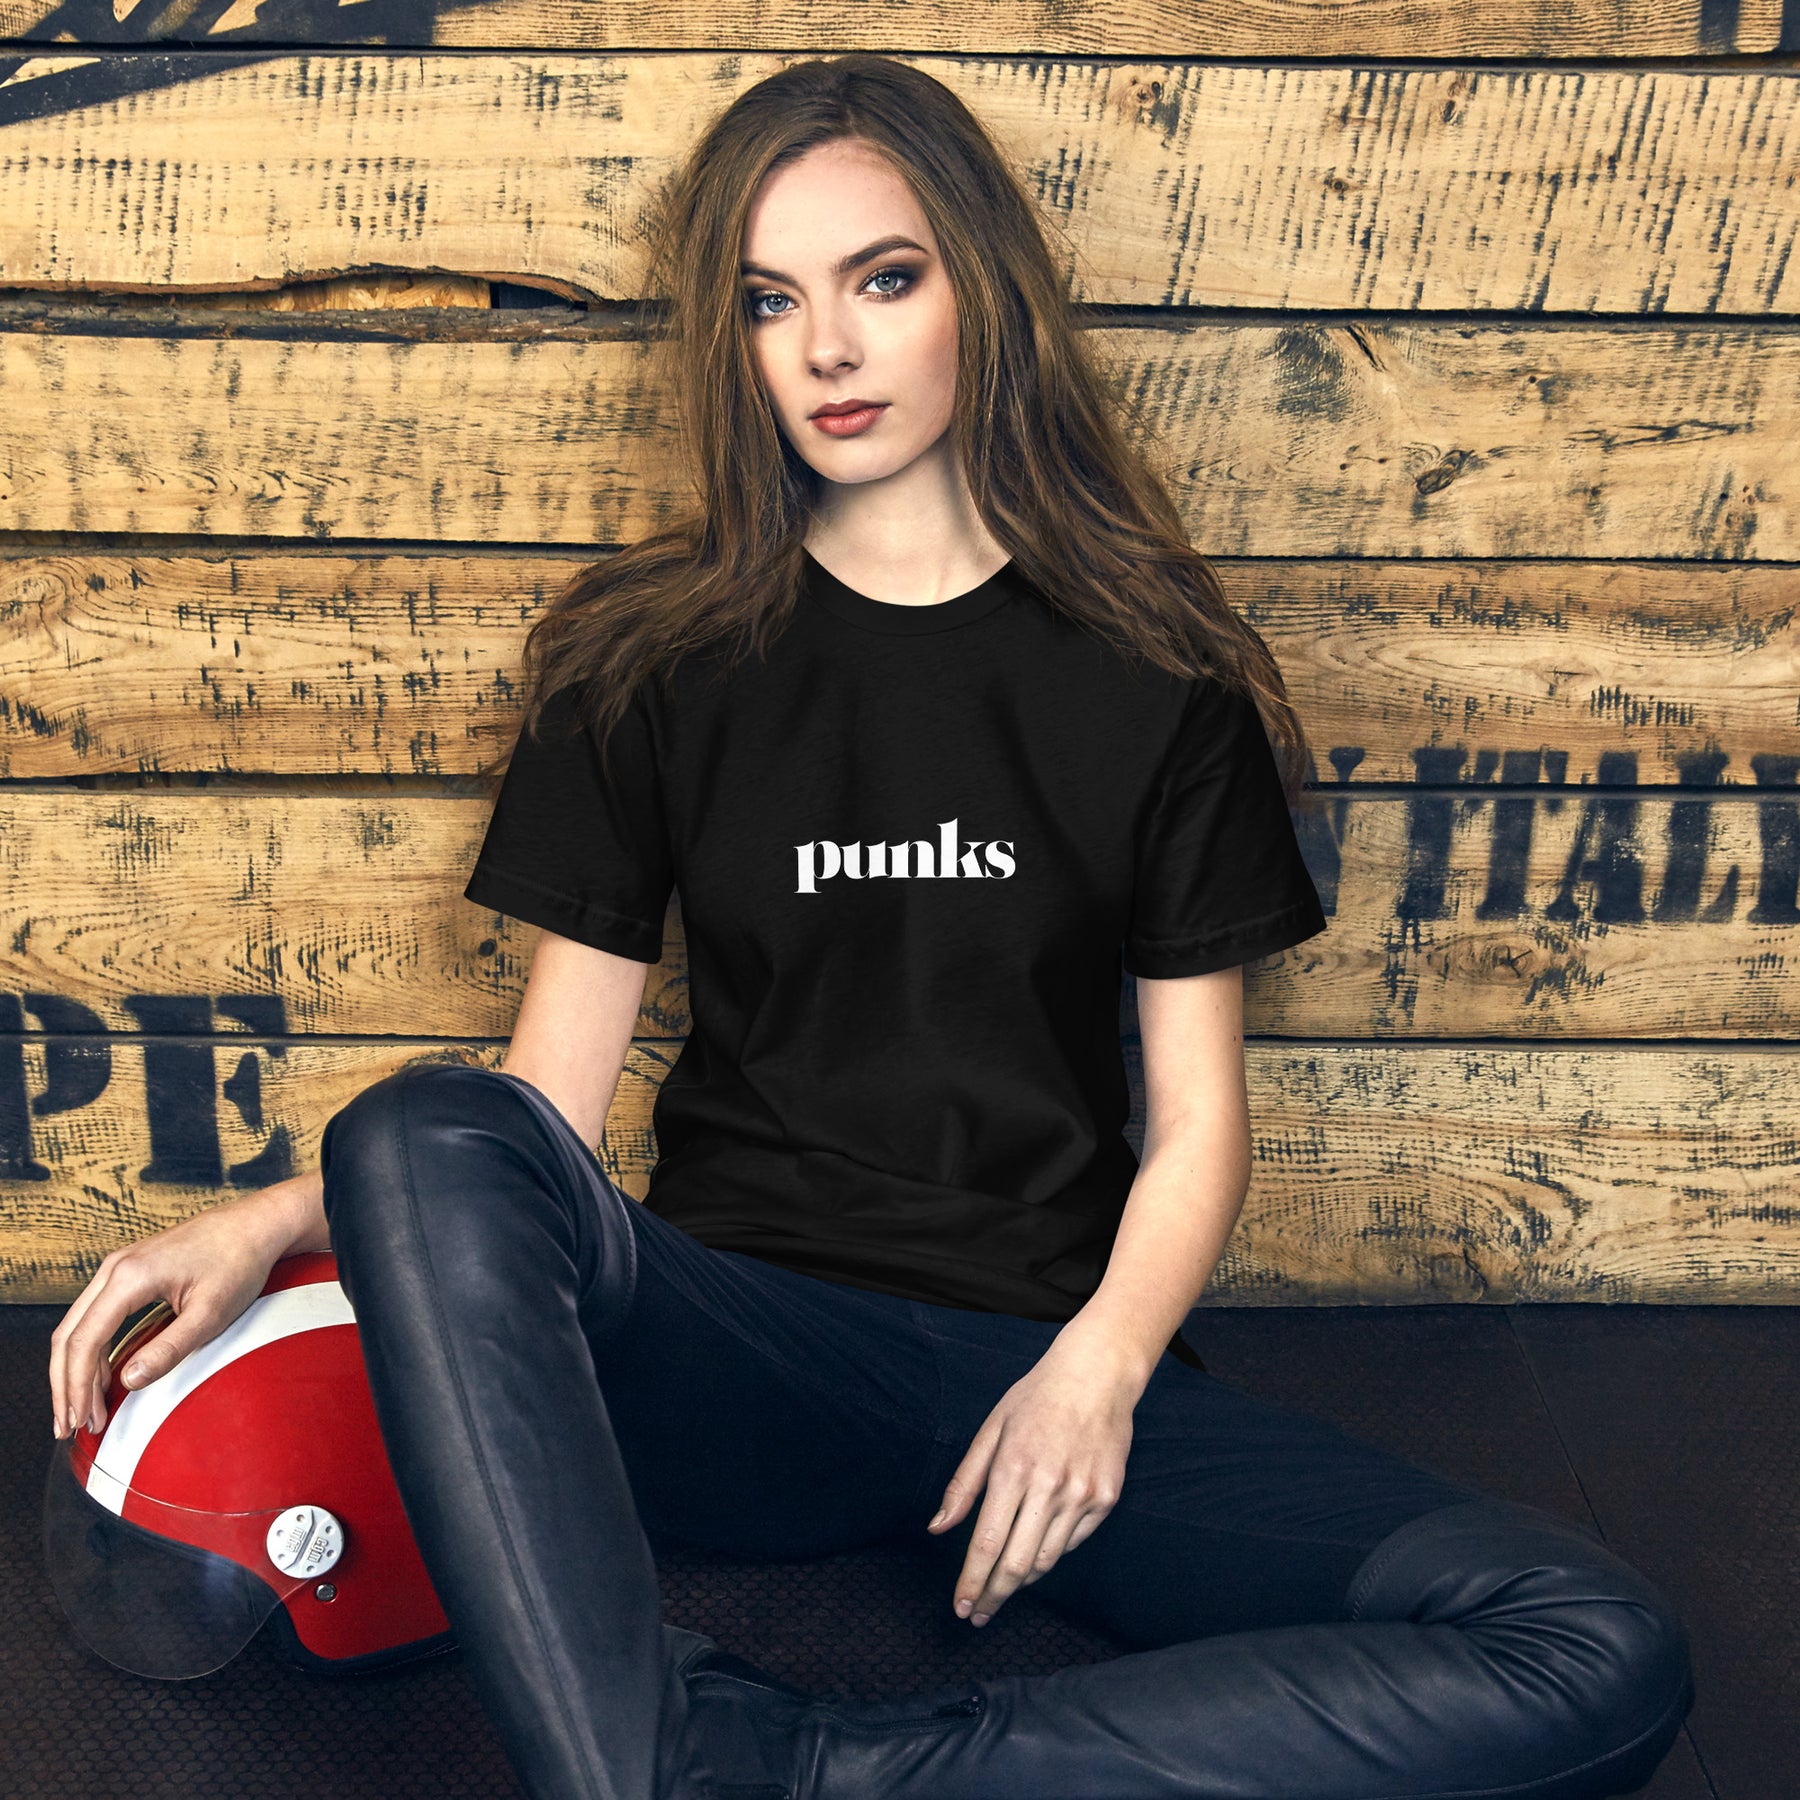 Punks | Unisex t-shirt